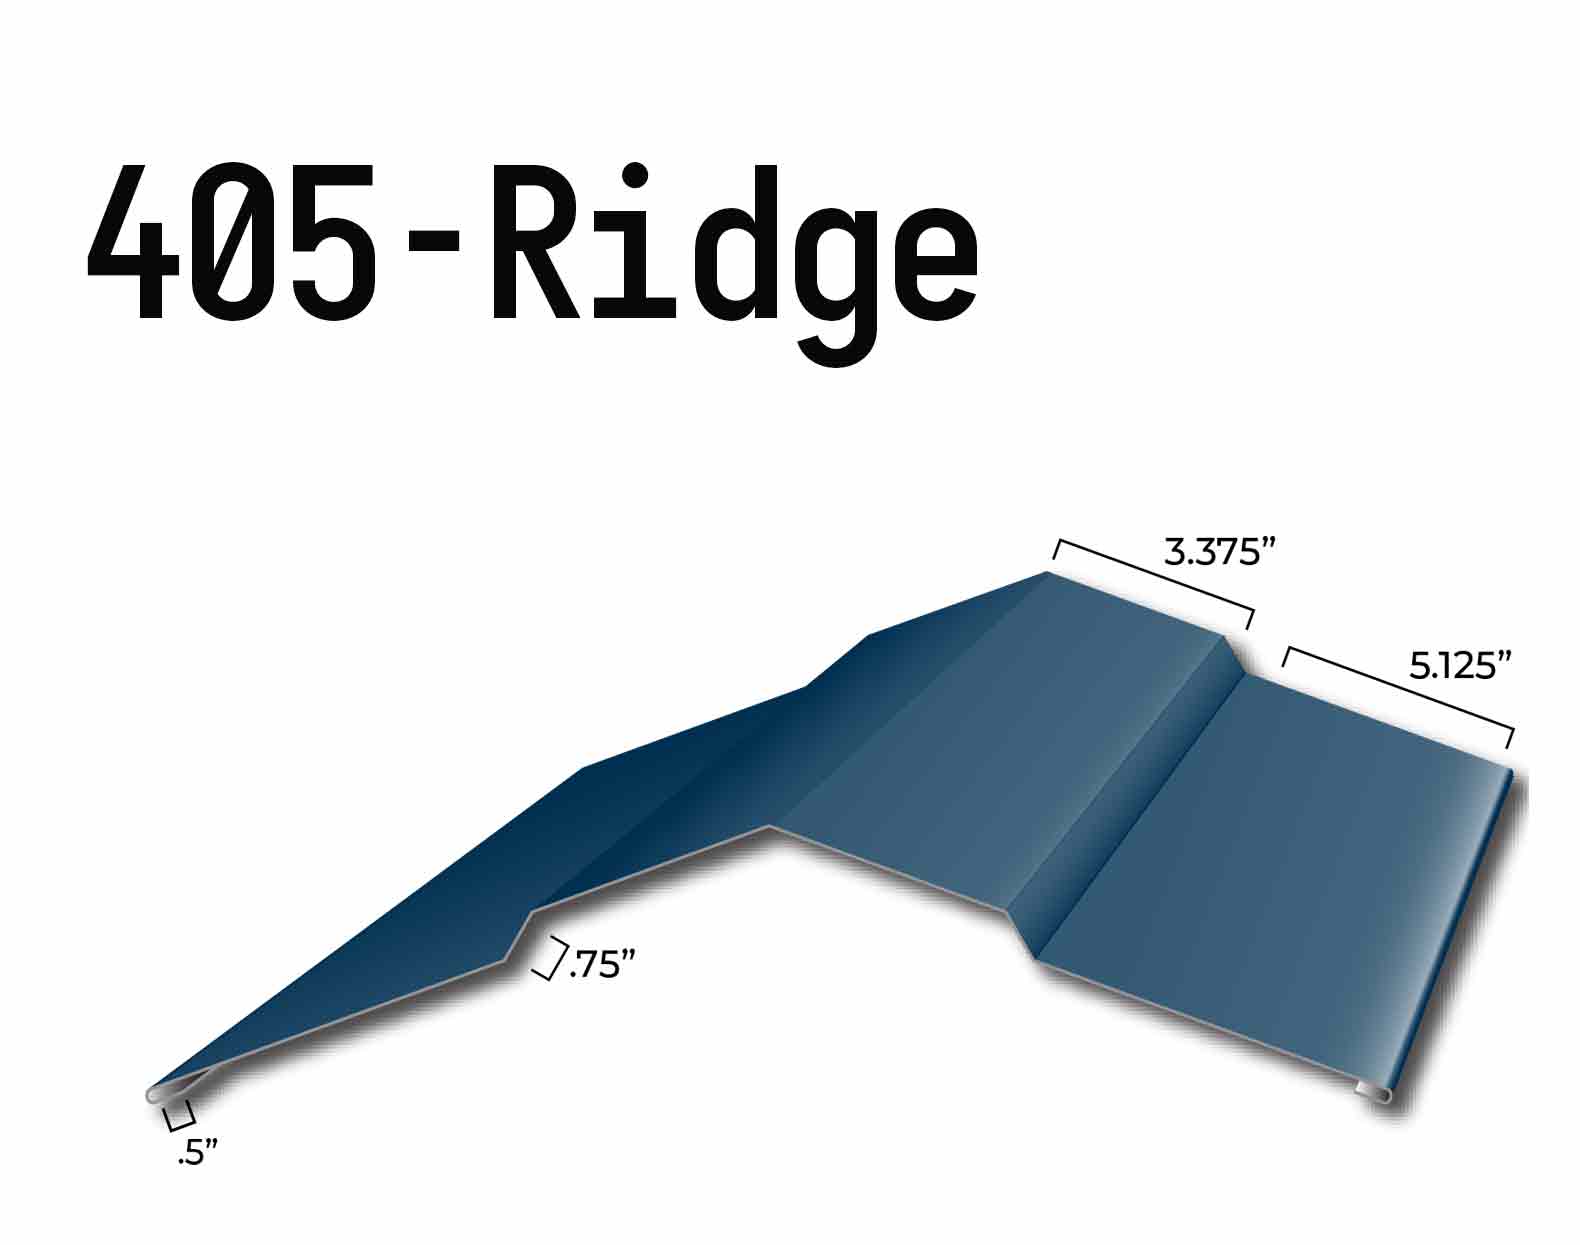 MRS-FF100 405-Ridge